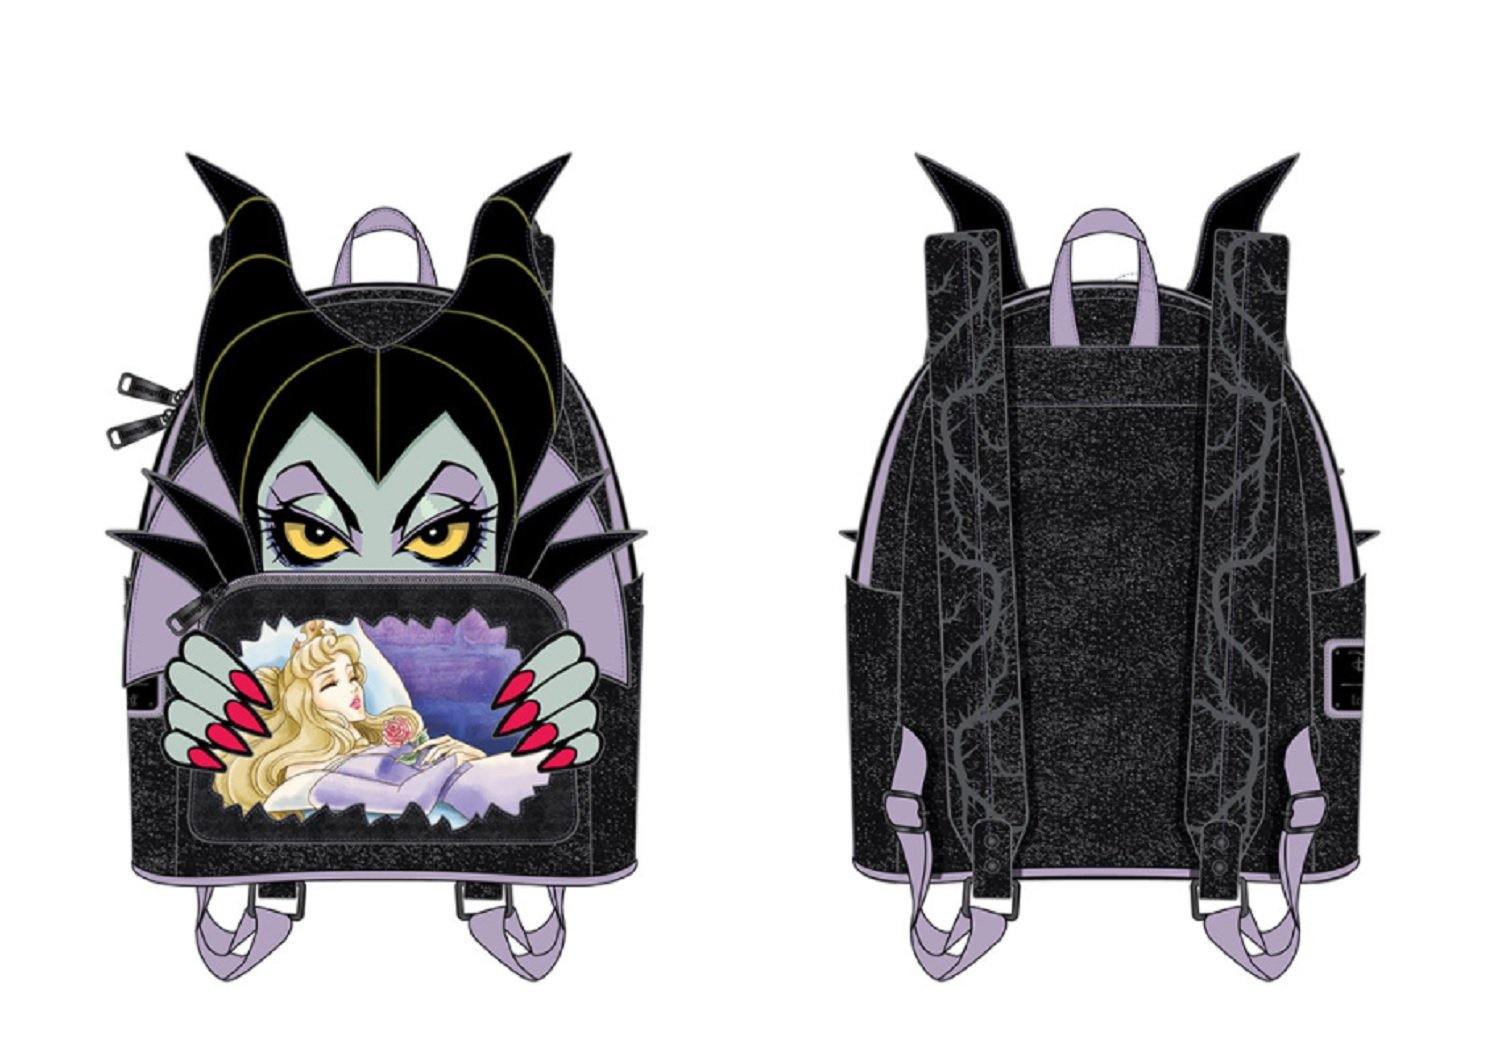 Disney Maleficent Handbag Apparel by Loungefly